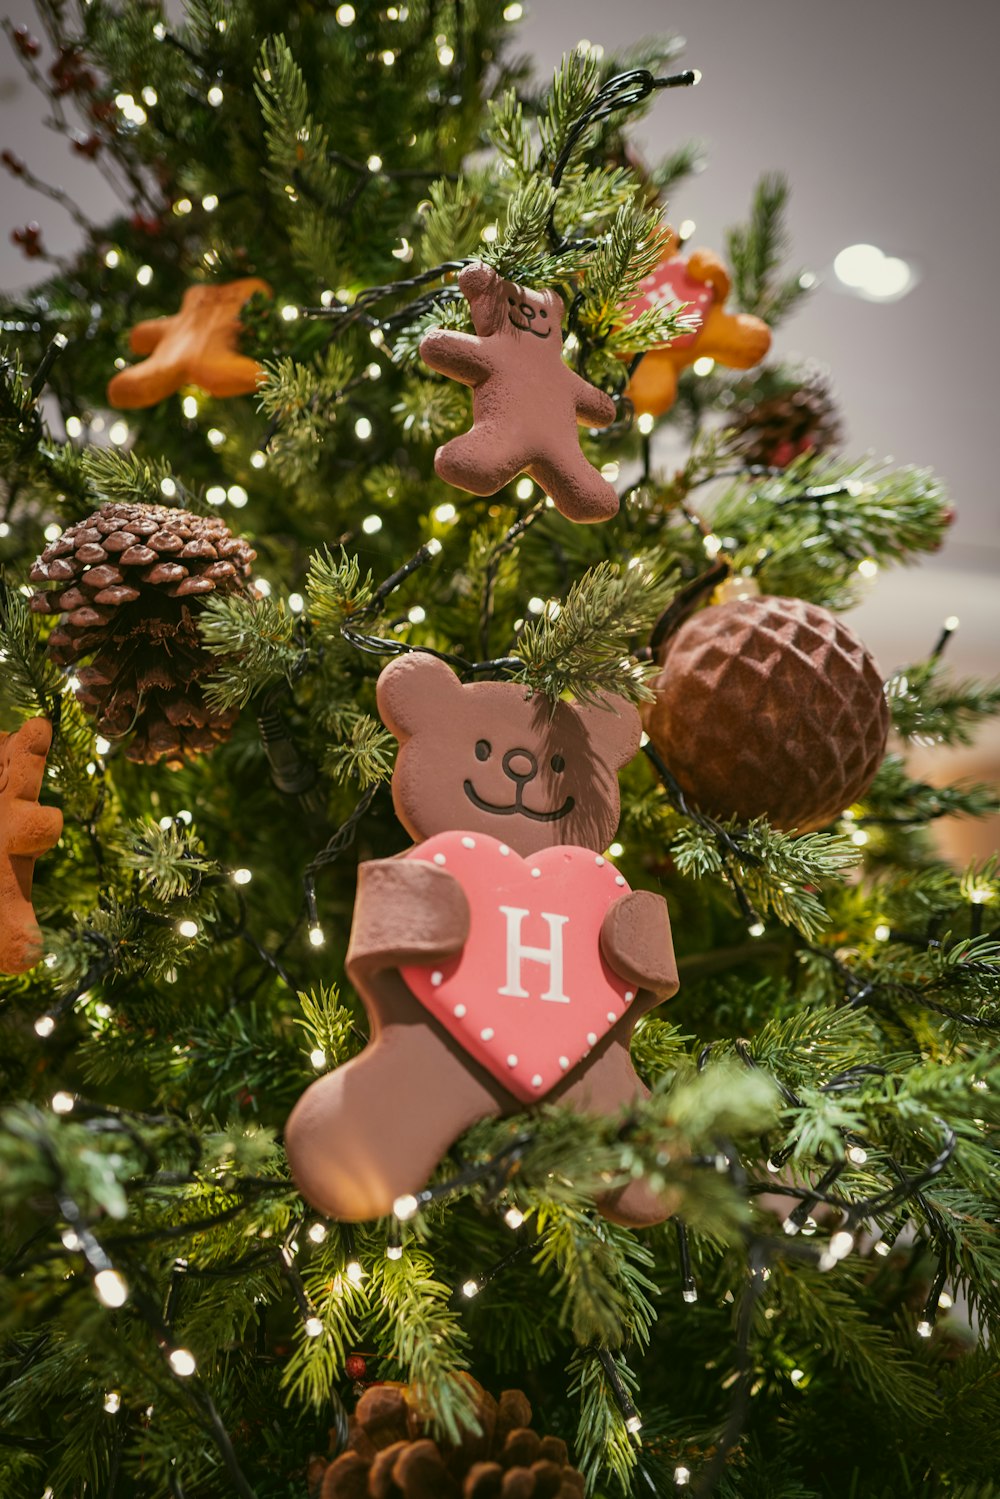 a christmas tree with a teddy bear ornament on it